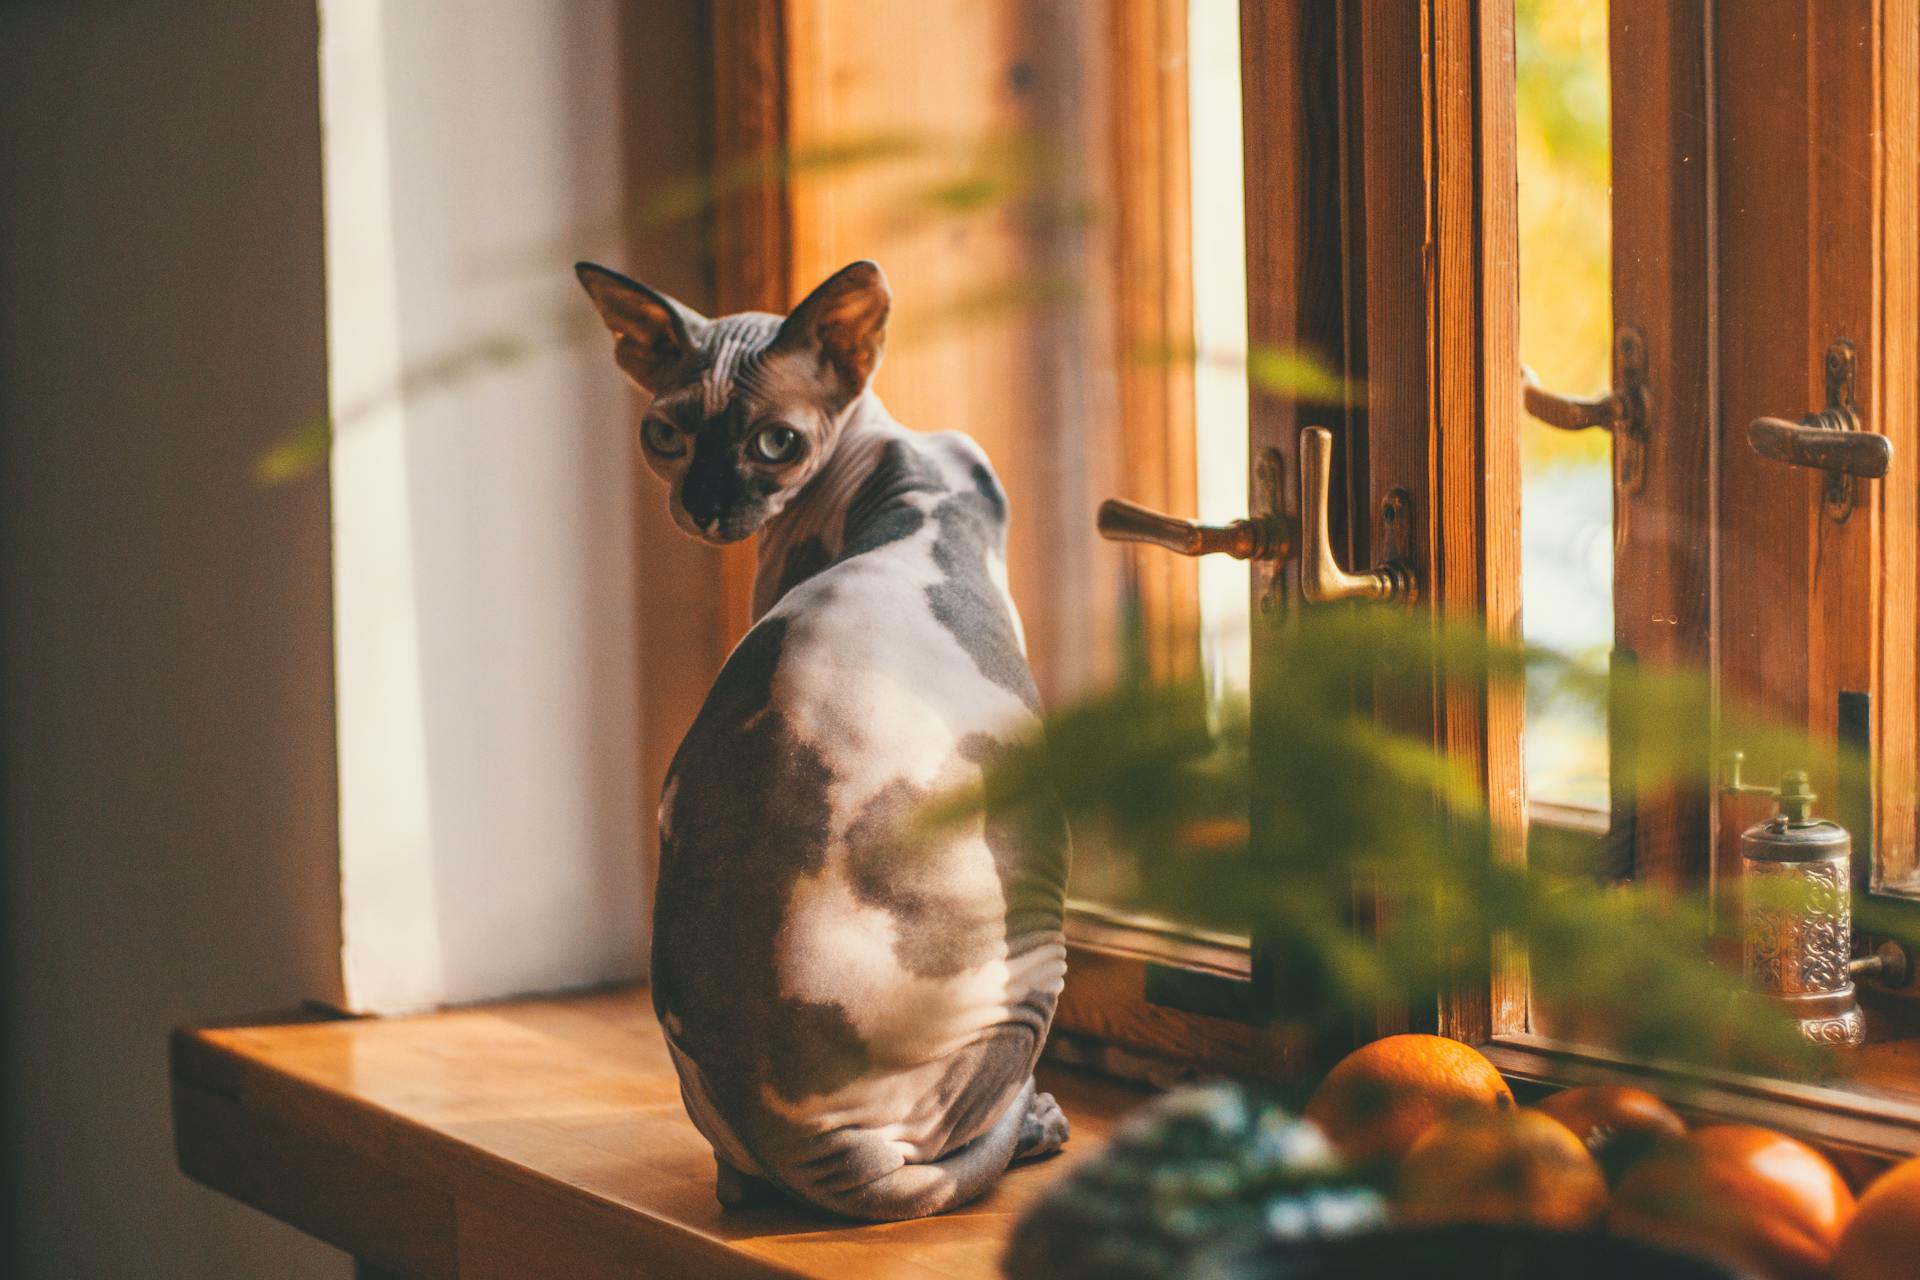 A pregnant Sphynx cat sitting by a window